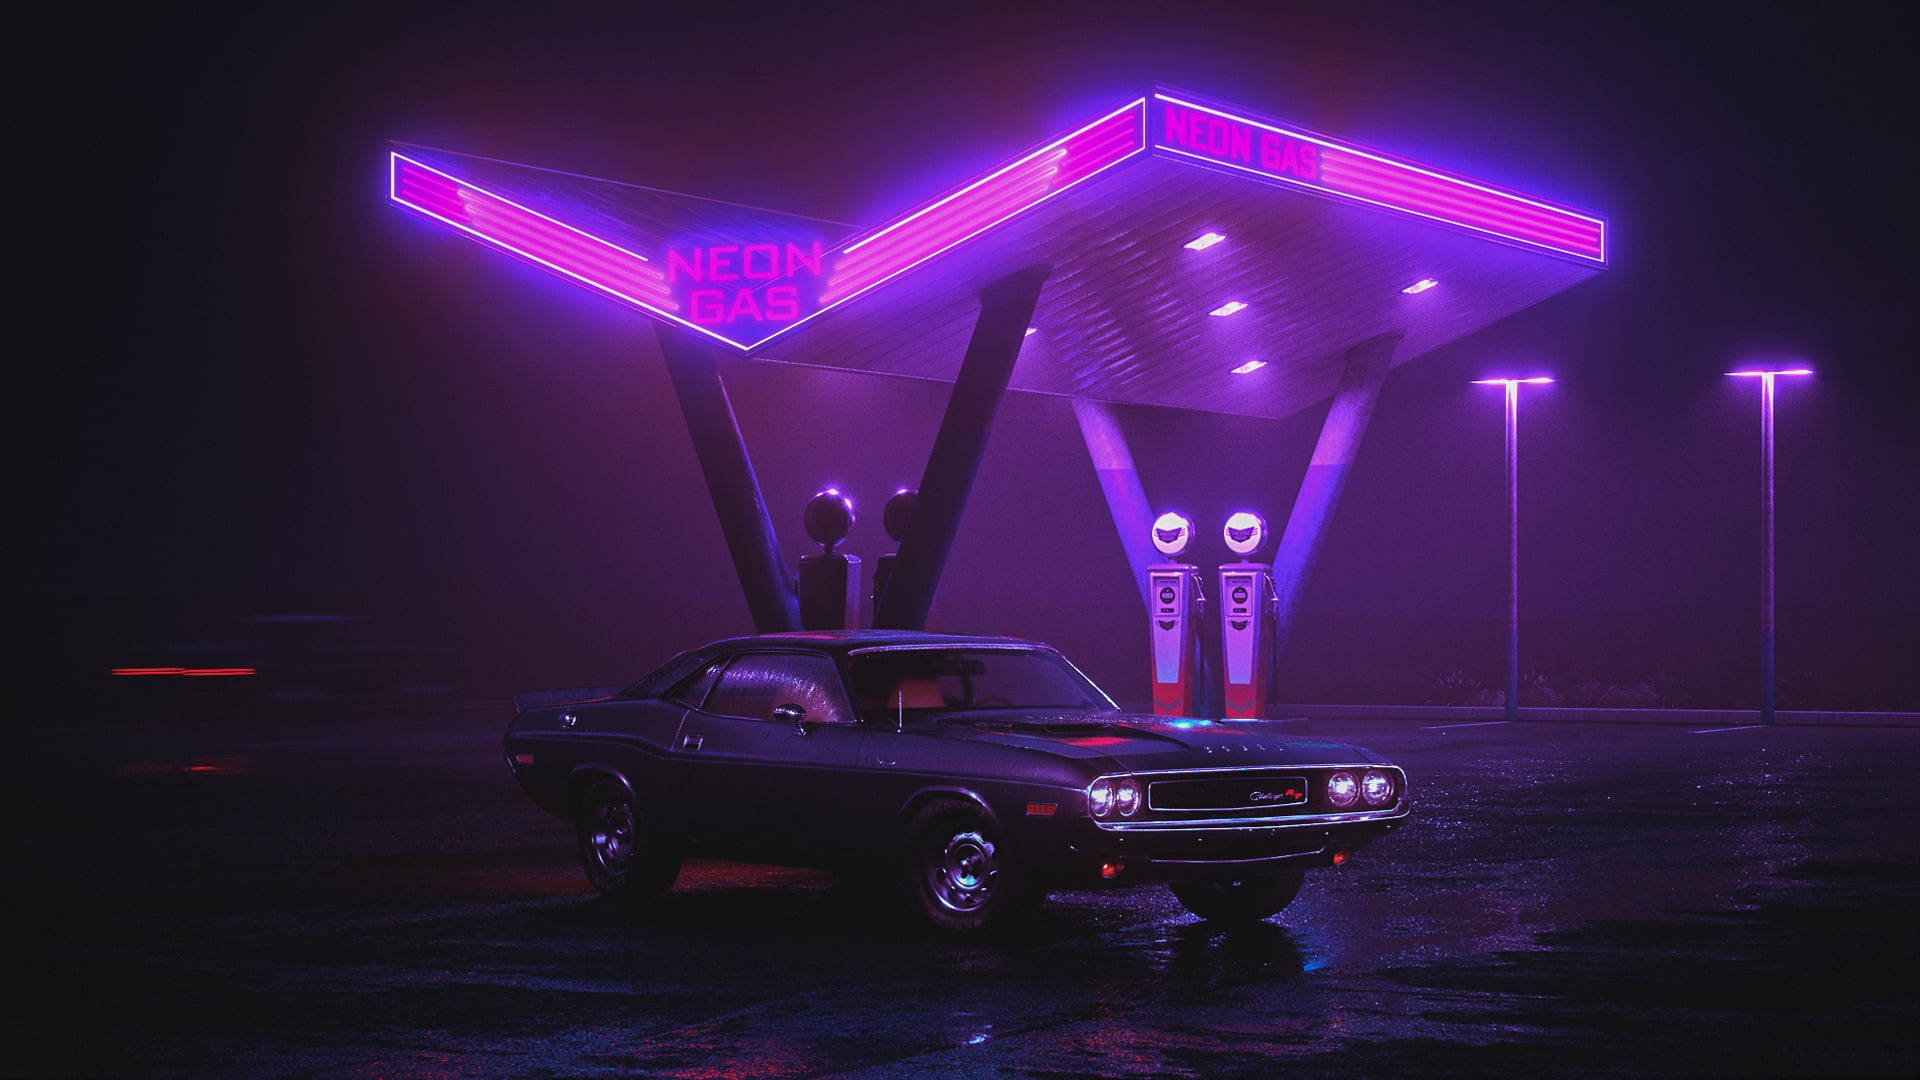 Nighttime Elegance: Glossy Black Car Under Neon Purple Gas Station Lights